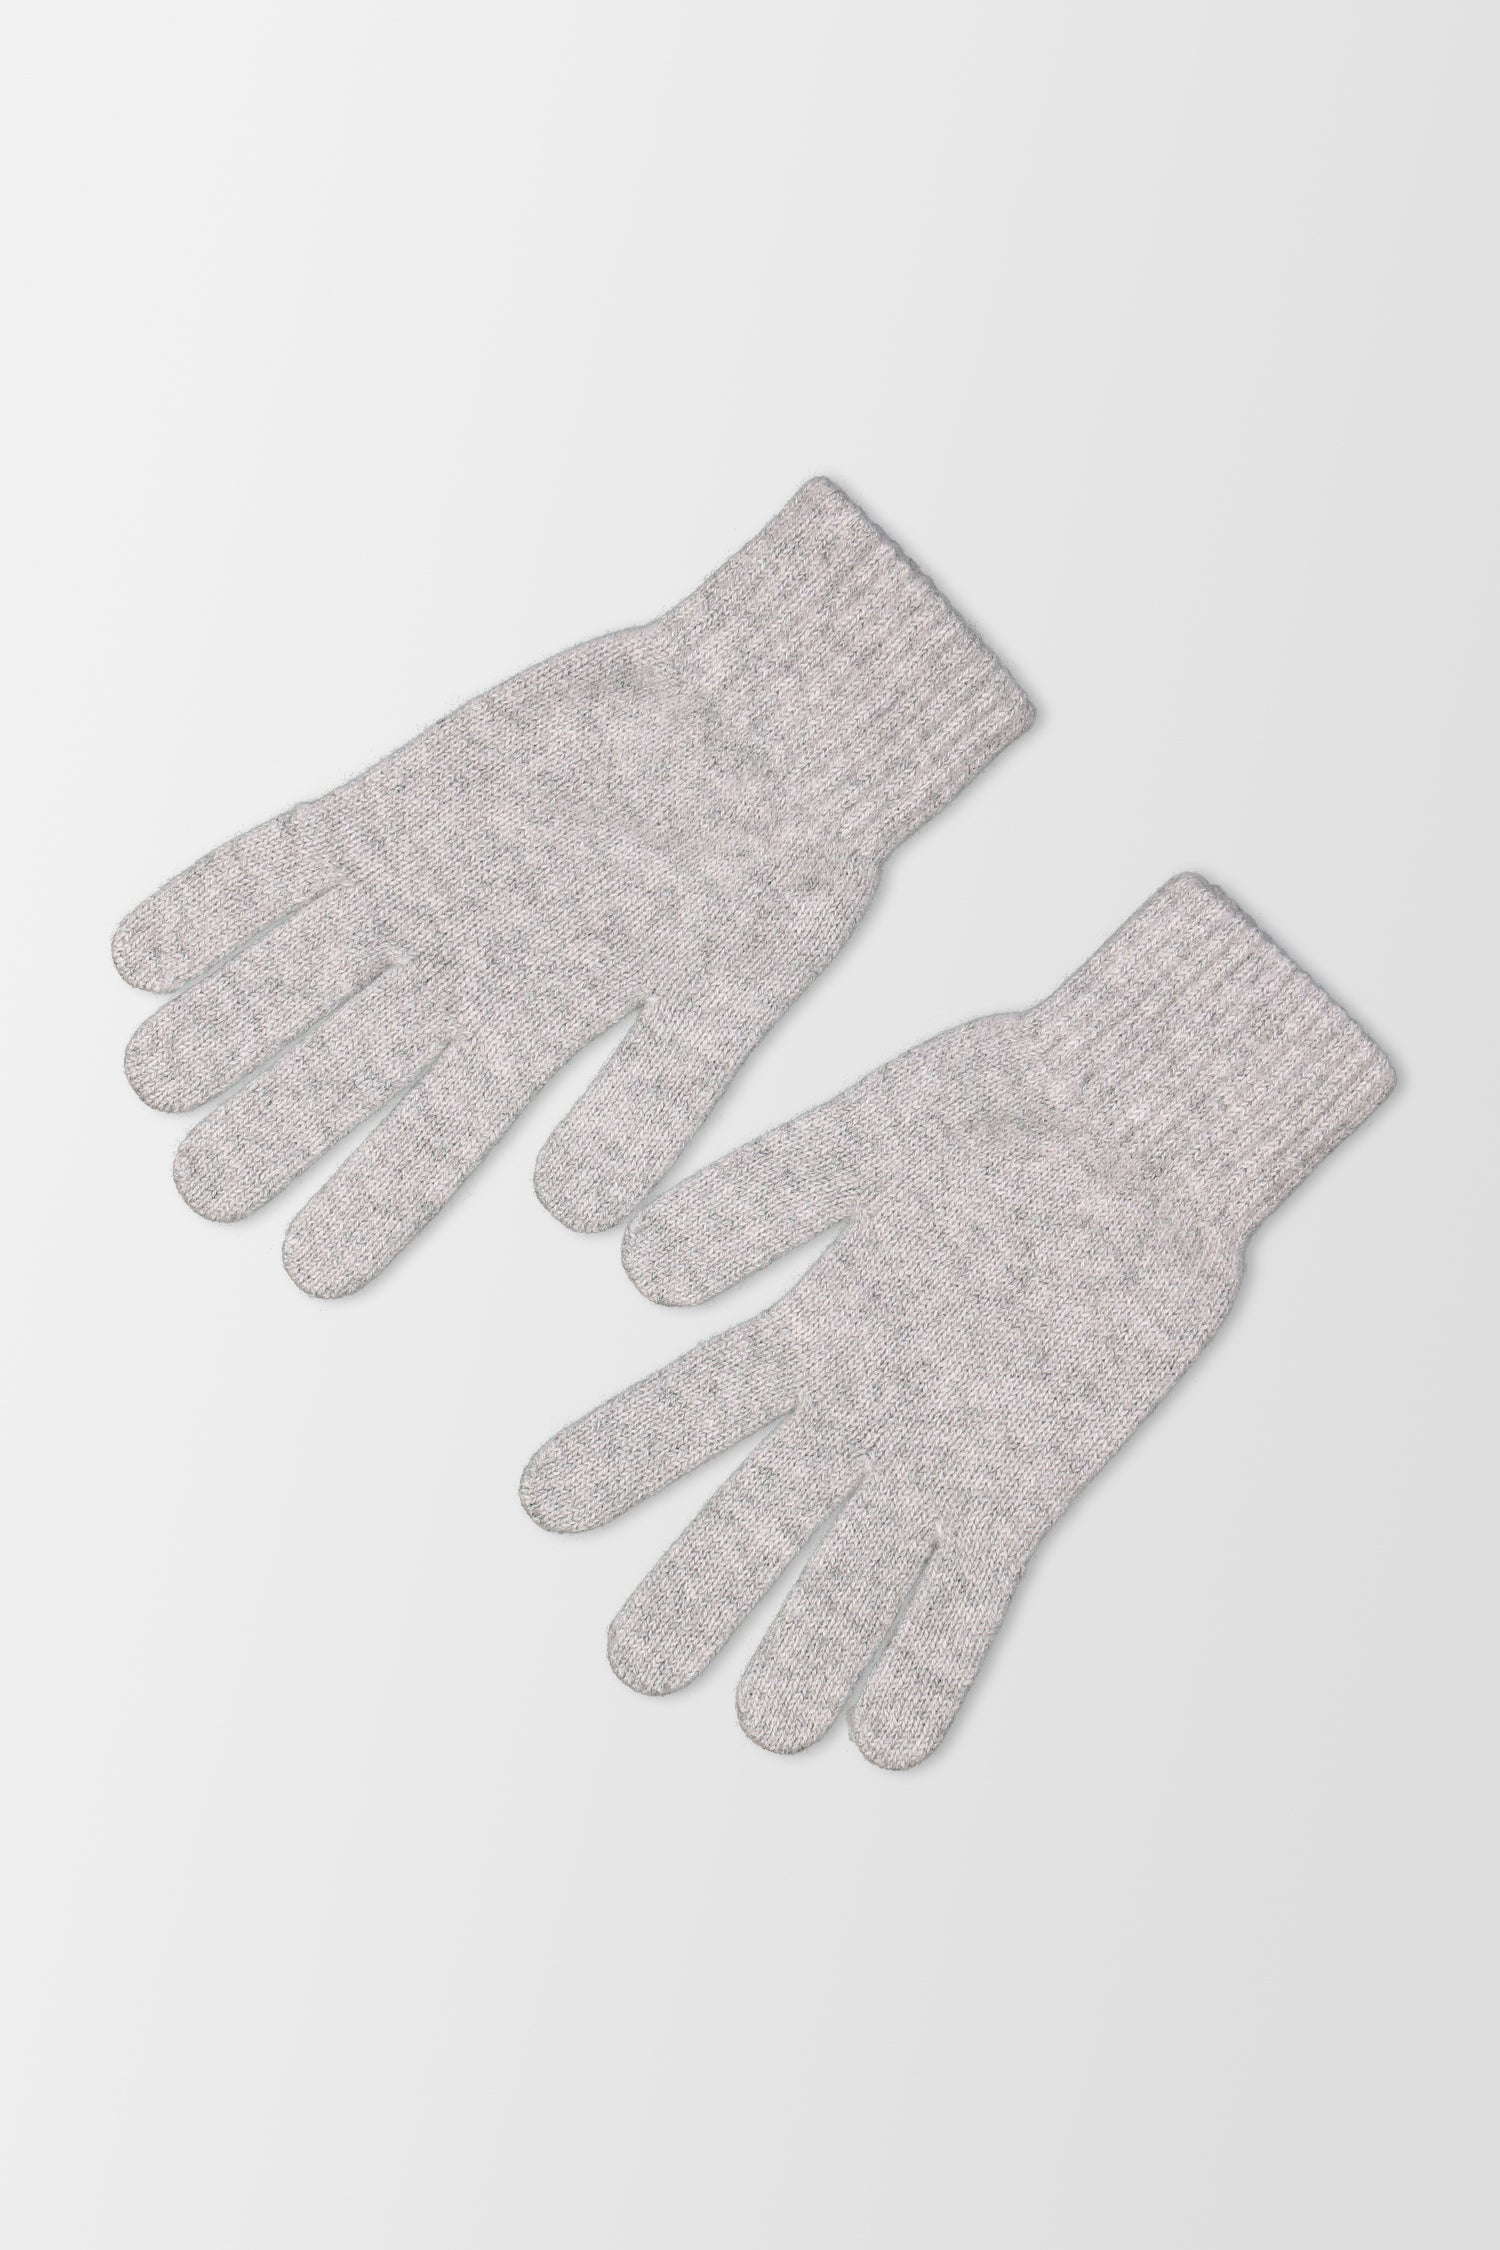 Joshua Ellis Knitted Grey Gloves